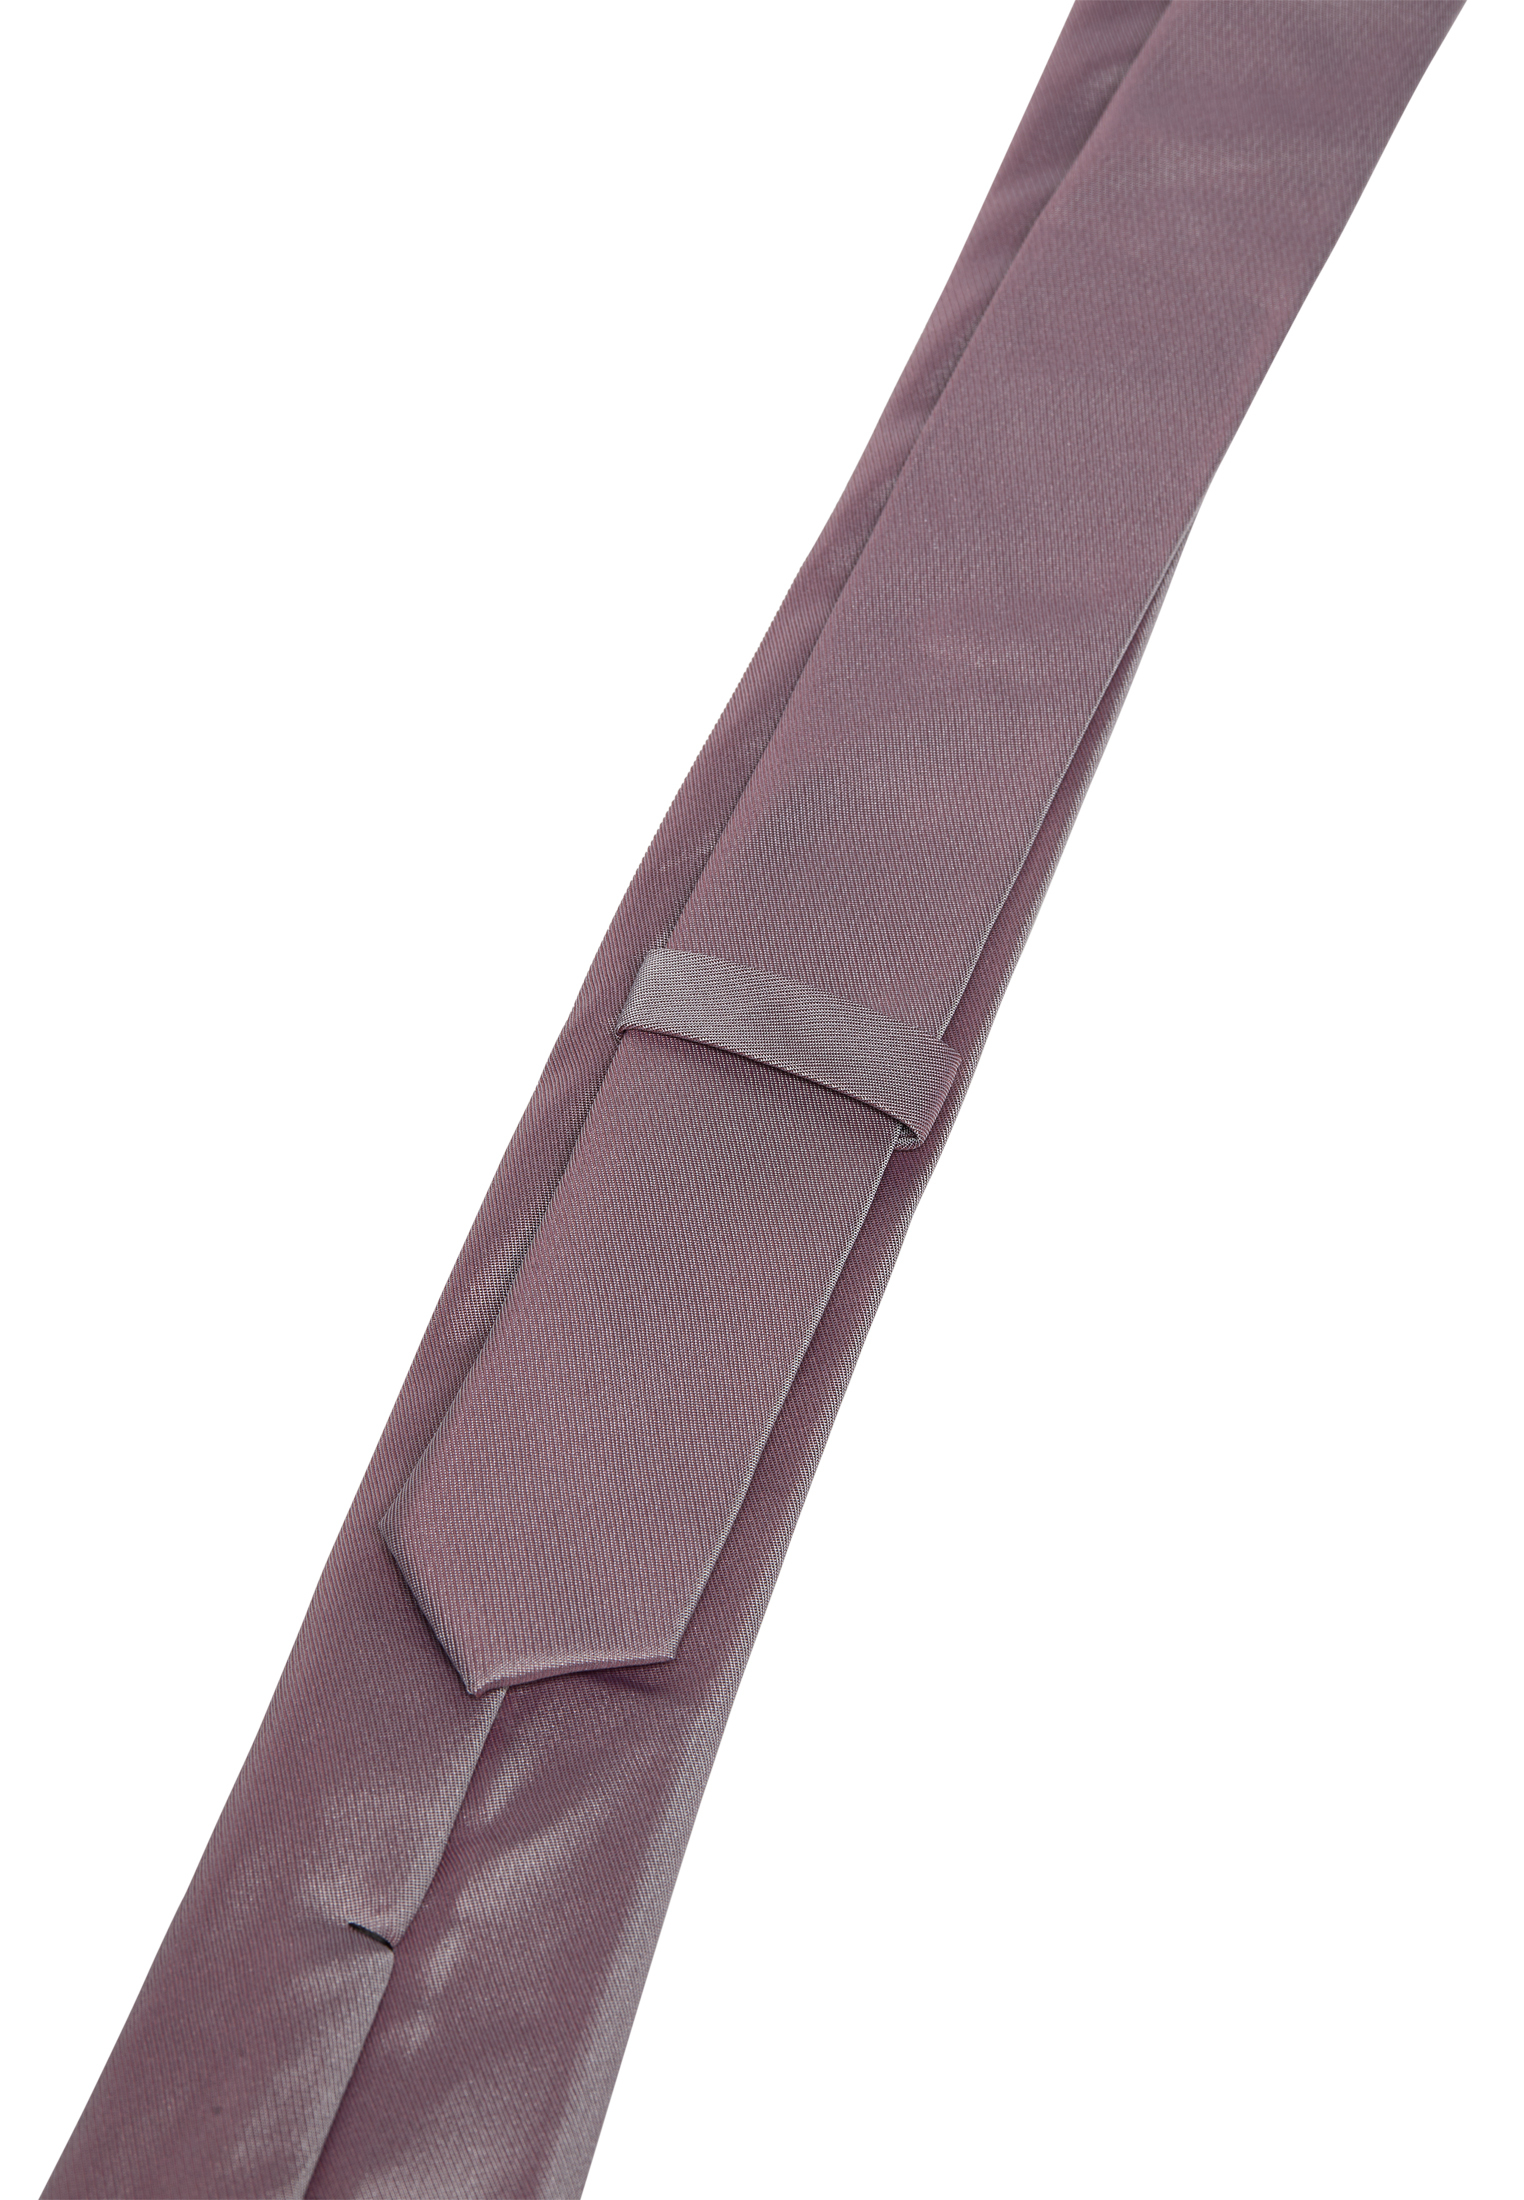 Krawatte in rosa | unifarben | 142 | rosa 1AC02085-15-11-142